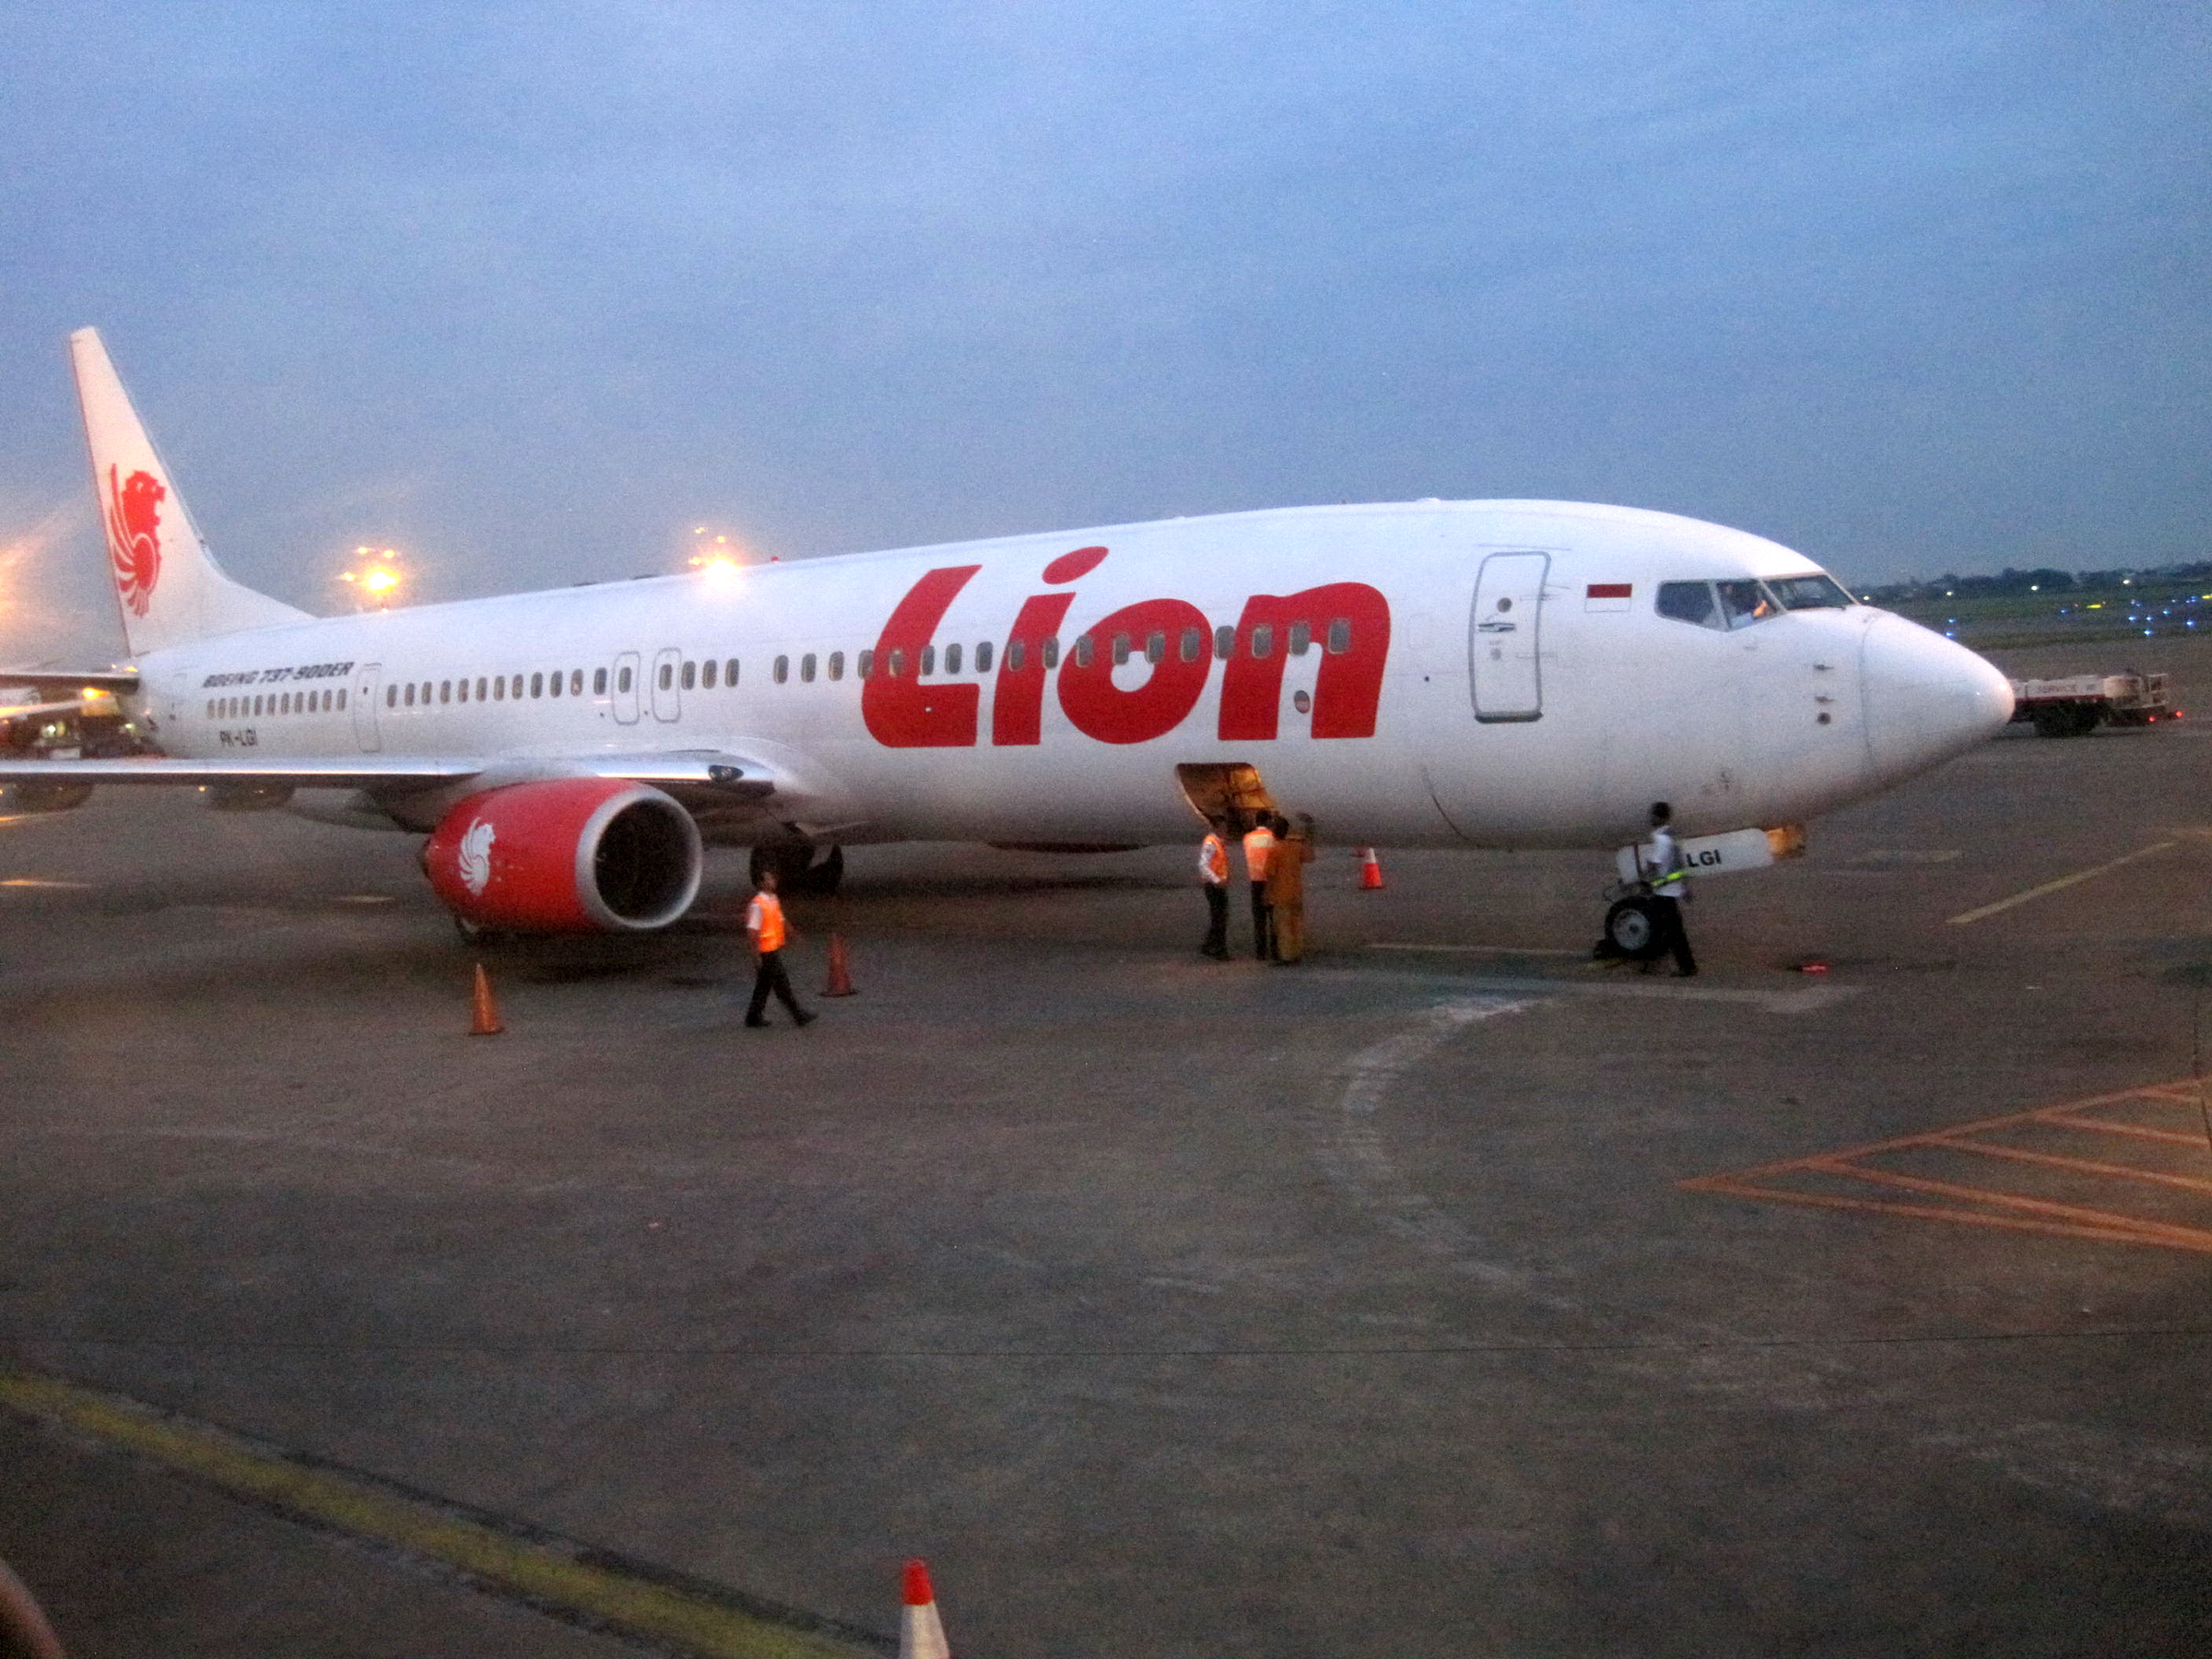 A Lion Air plane in Jakarta’s Soekarno-Hatta Airport. Photo: Wikimedia Commons